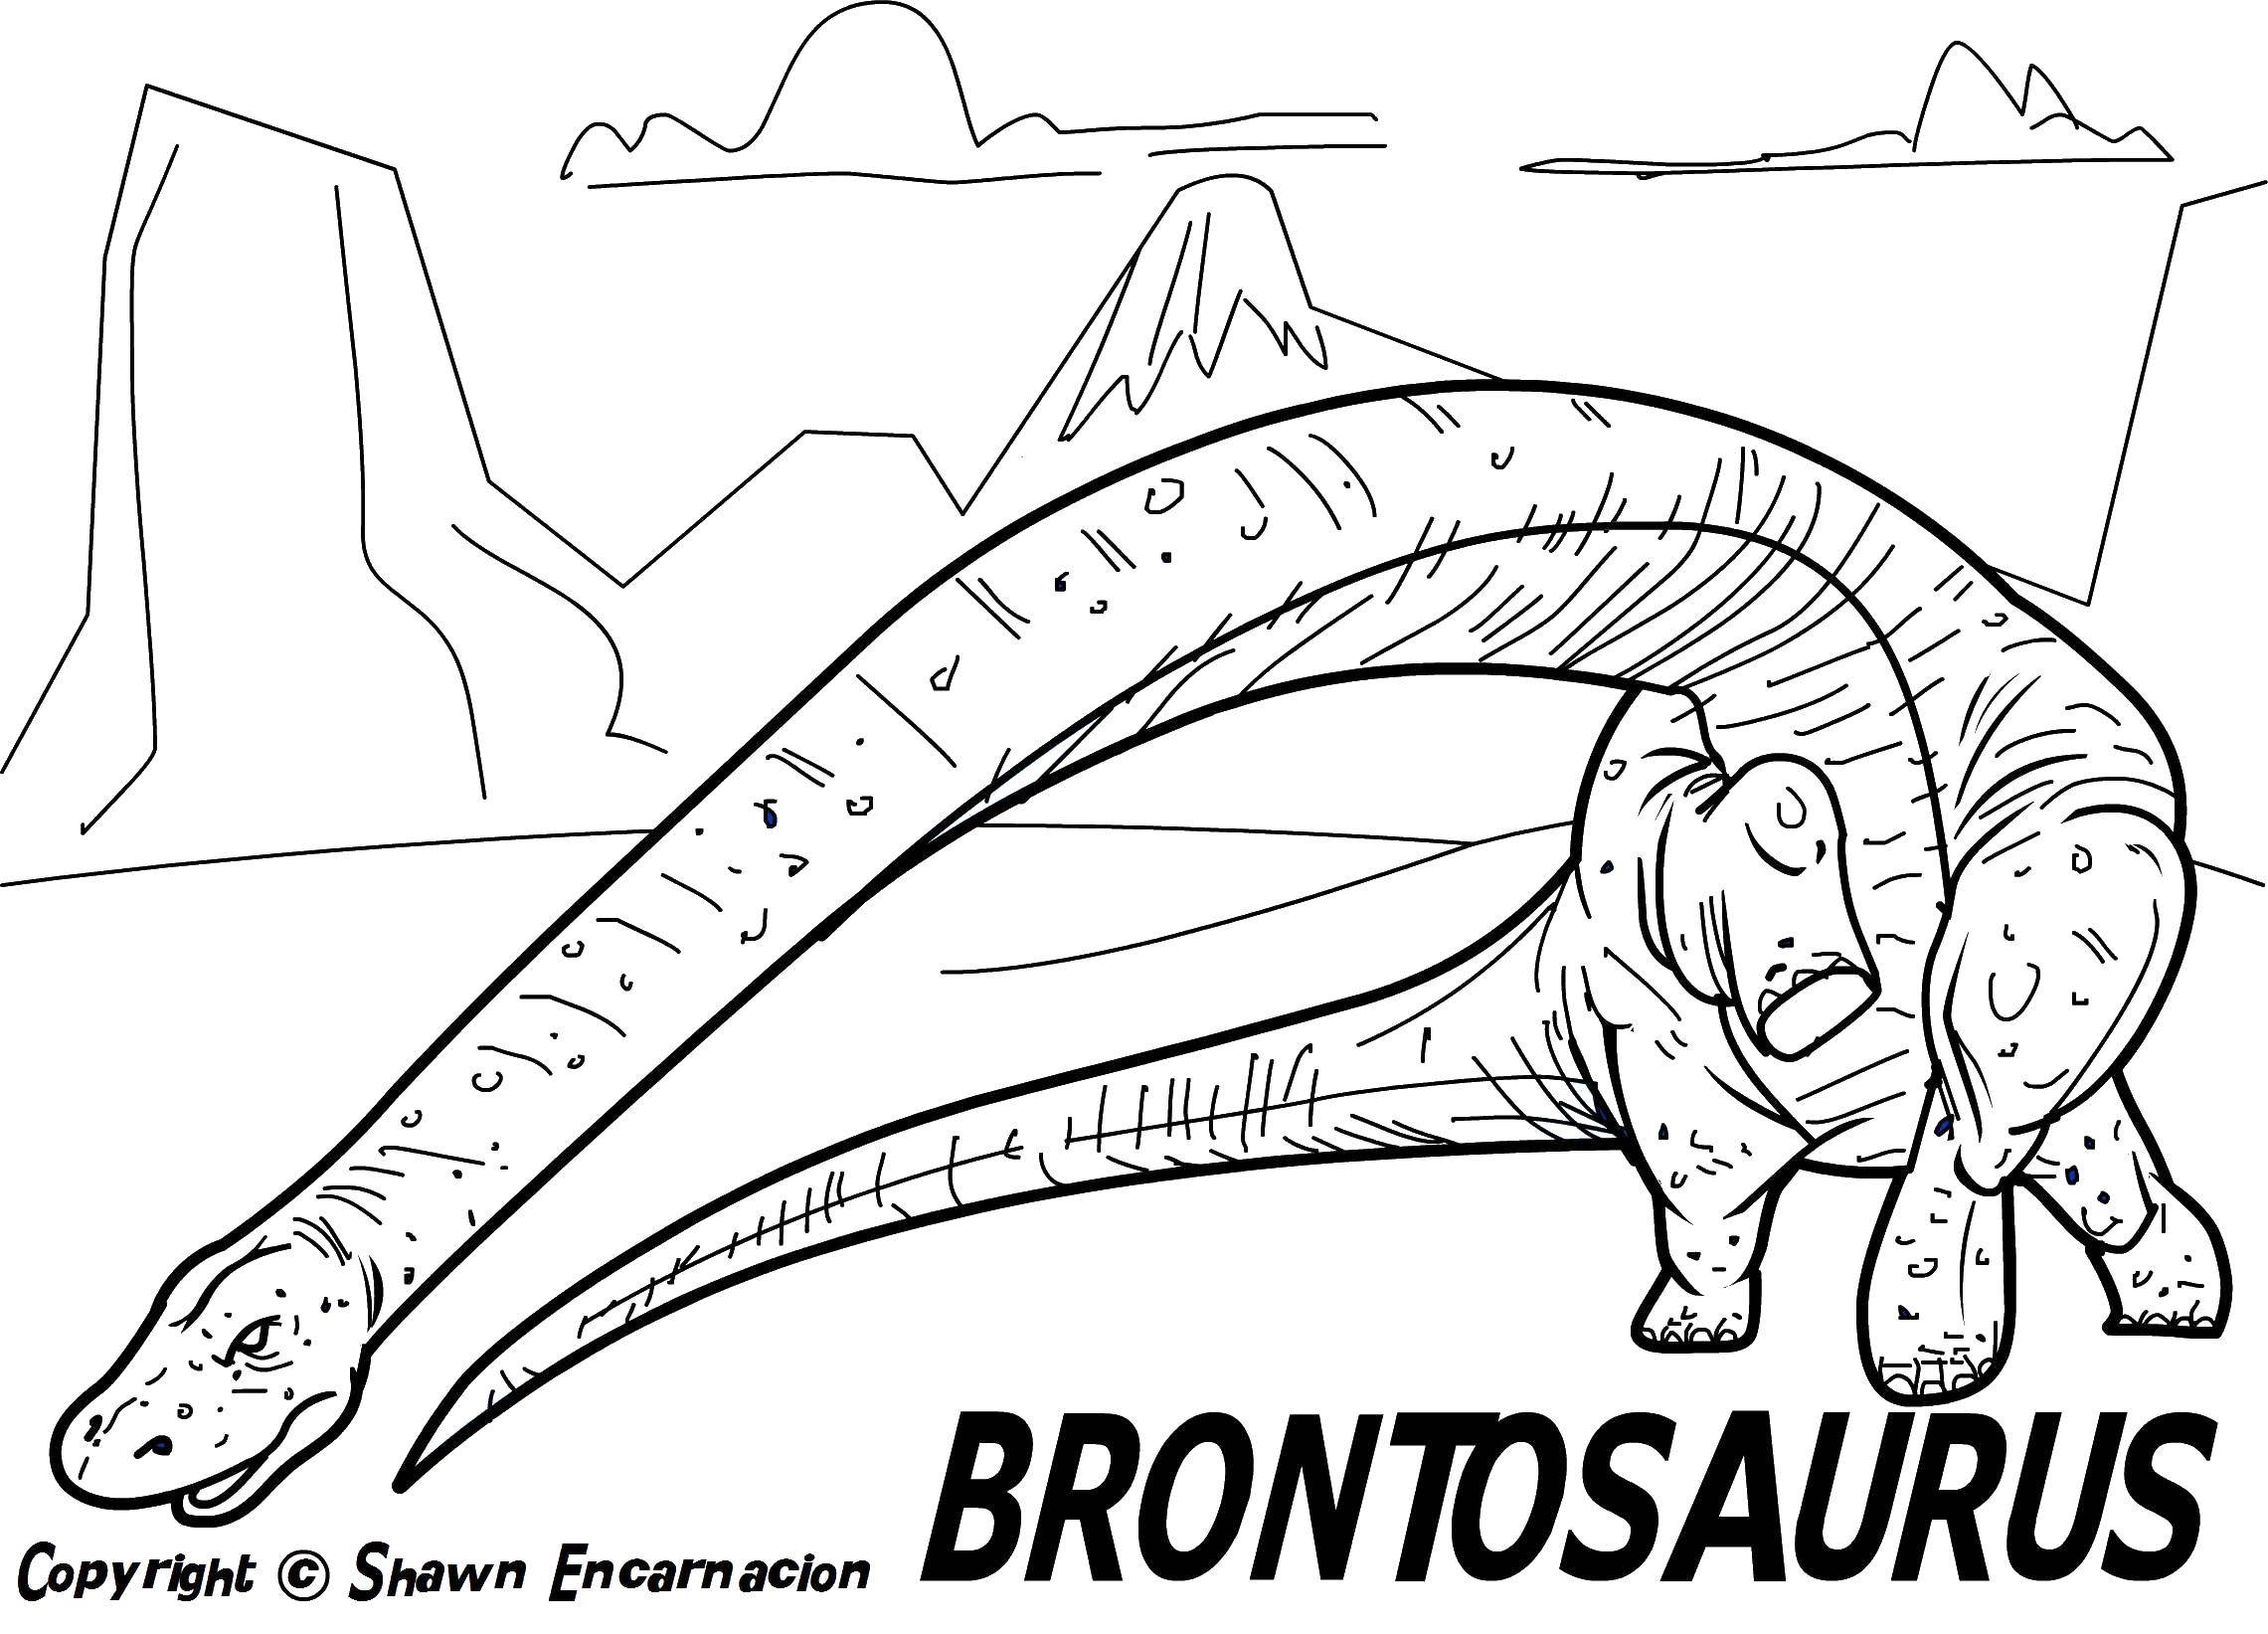 Coloring Brontosaurus. Category dinosaur. Tags:  Jurassic Park, dinosaurs.